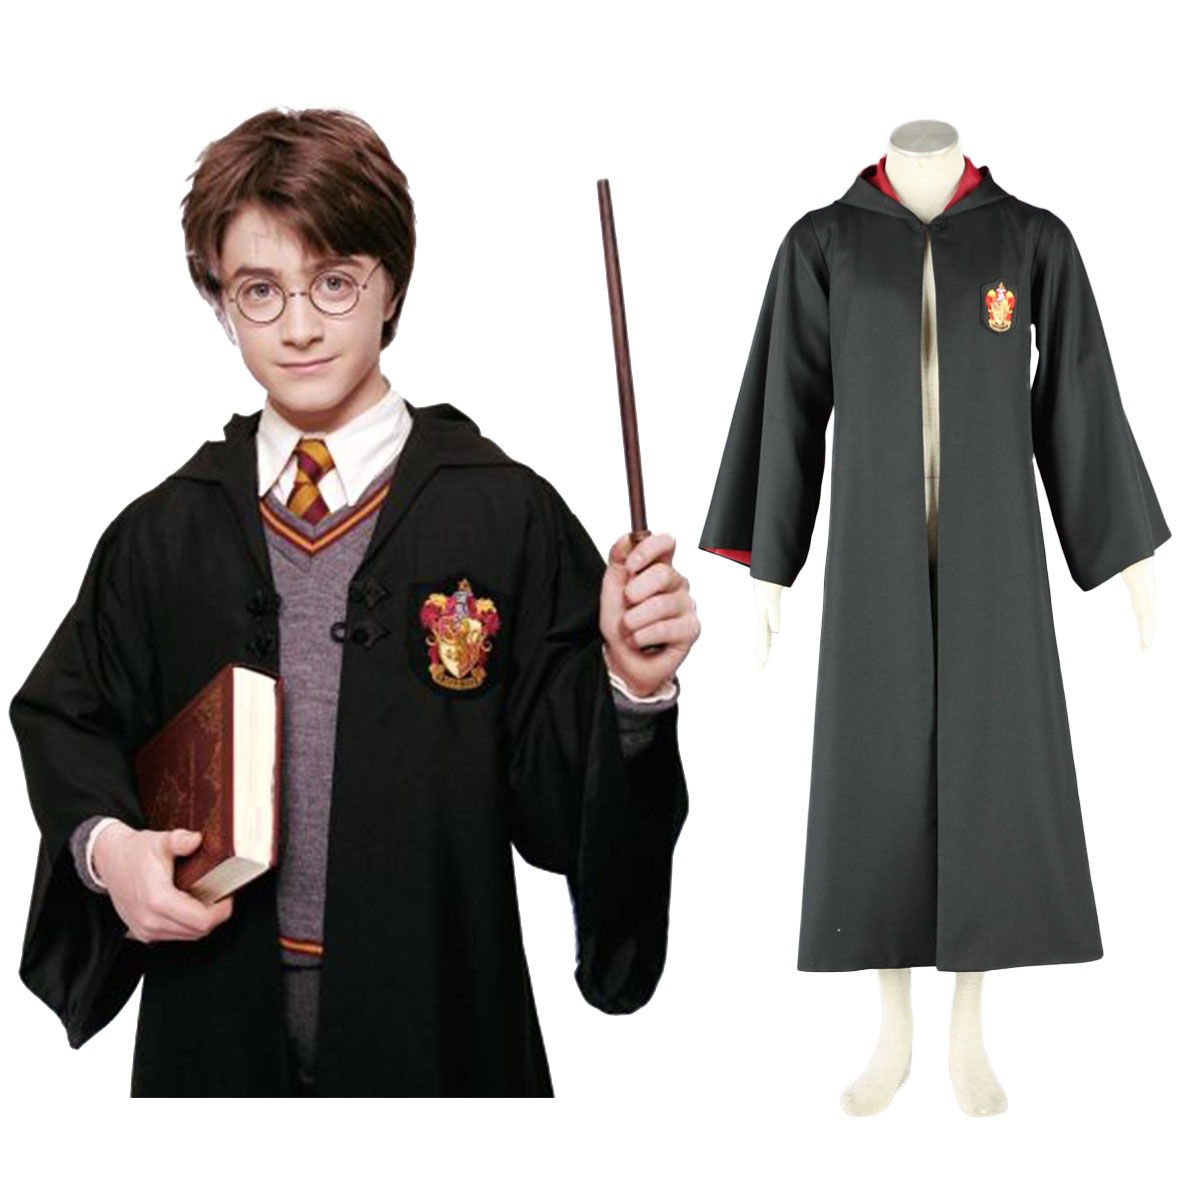 Harry Potter Gryffindor Uniform Cloak Cosplay Costumes Canada